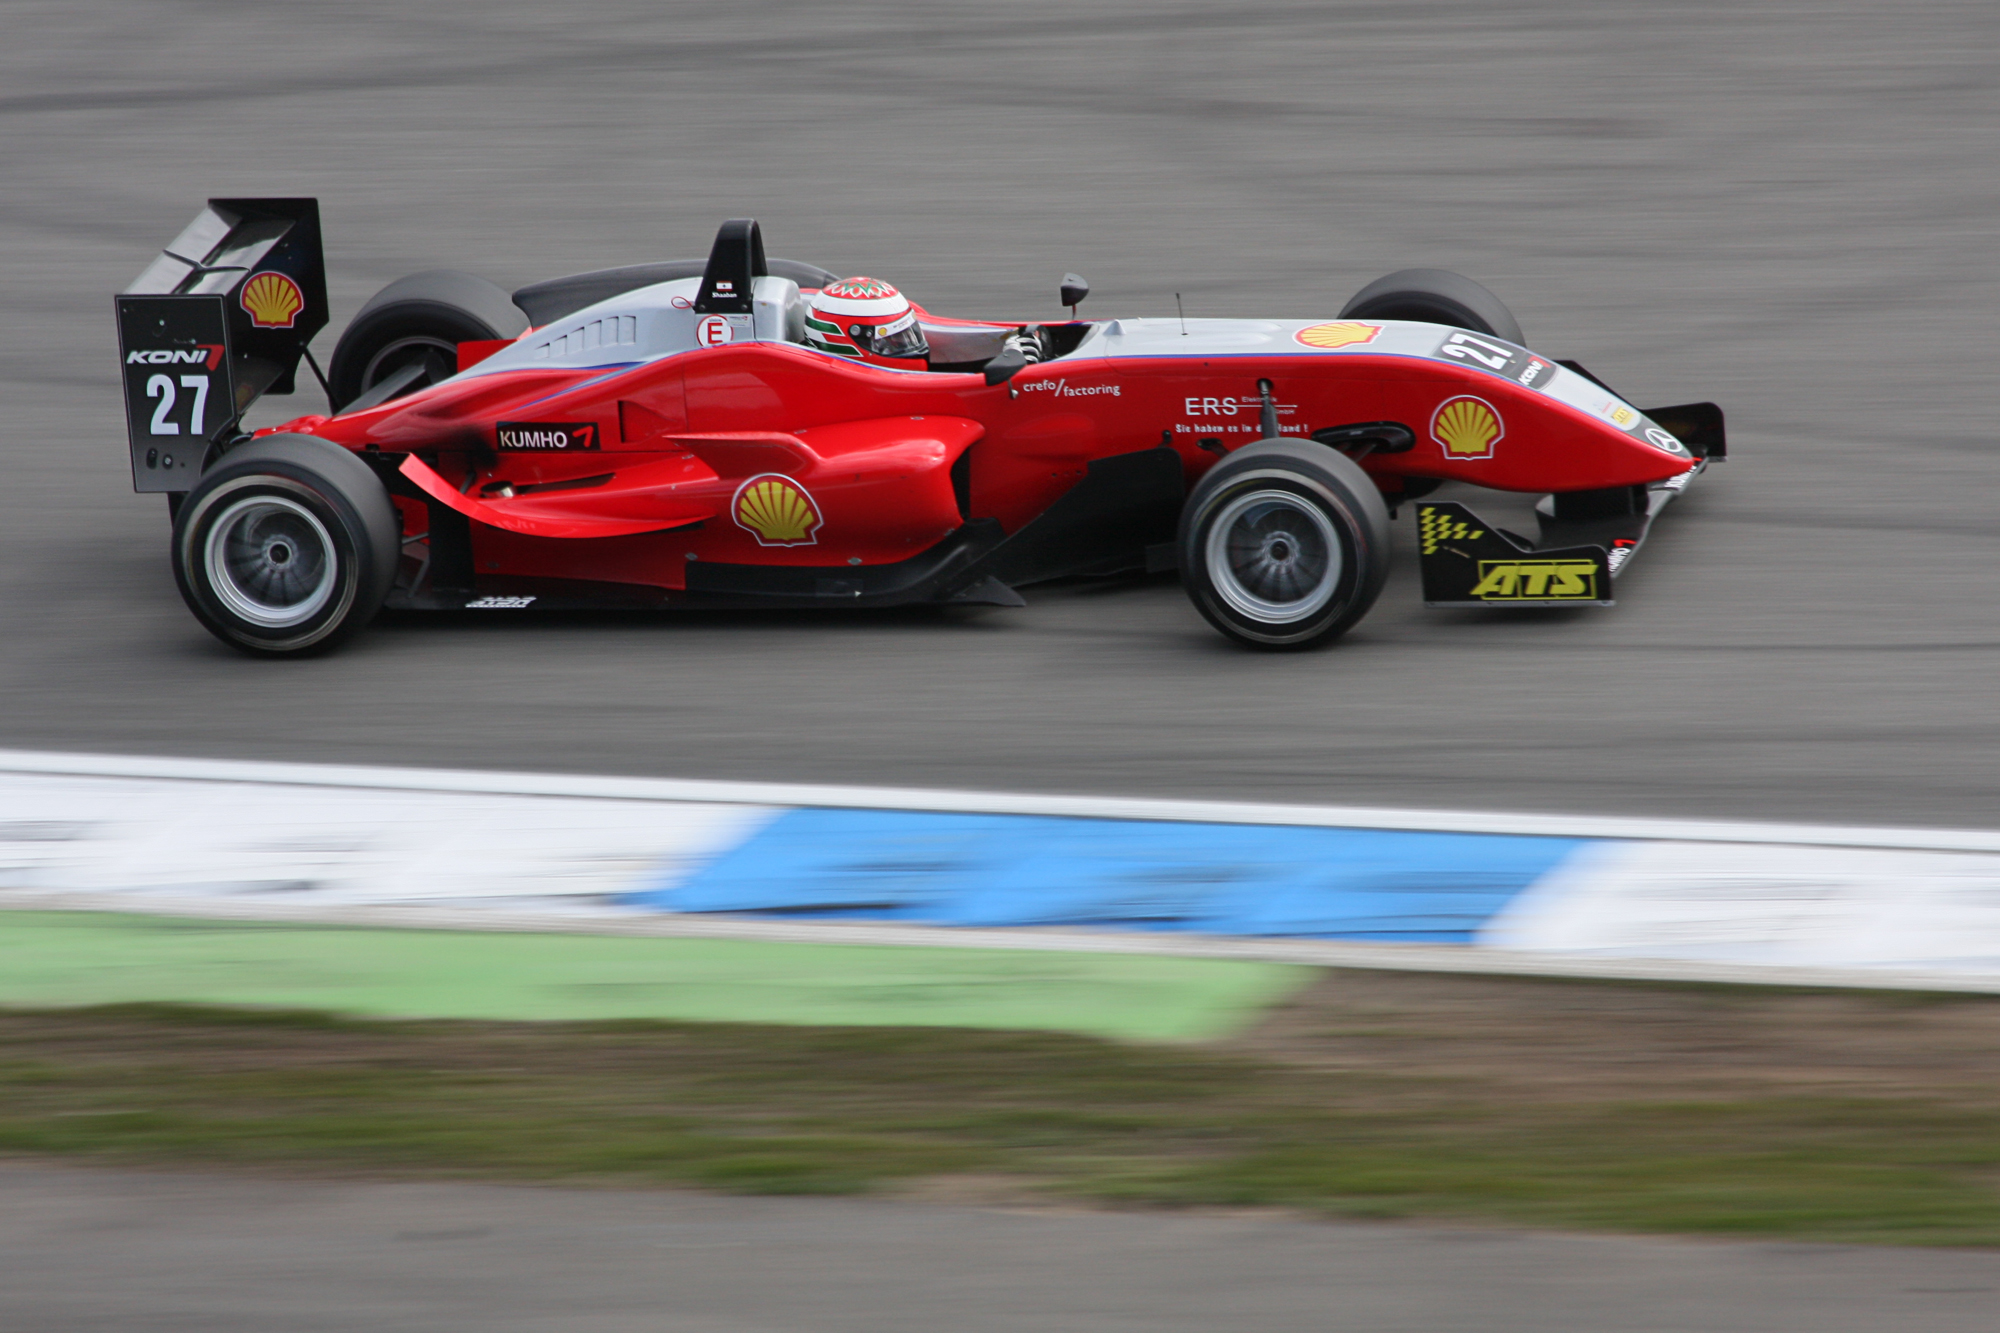 http://upload.wikimedia.org/wikipedia/commons/4/4a/Formel3_racing_car_amk.jpg